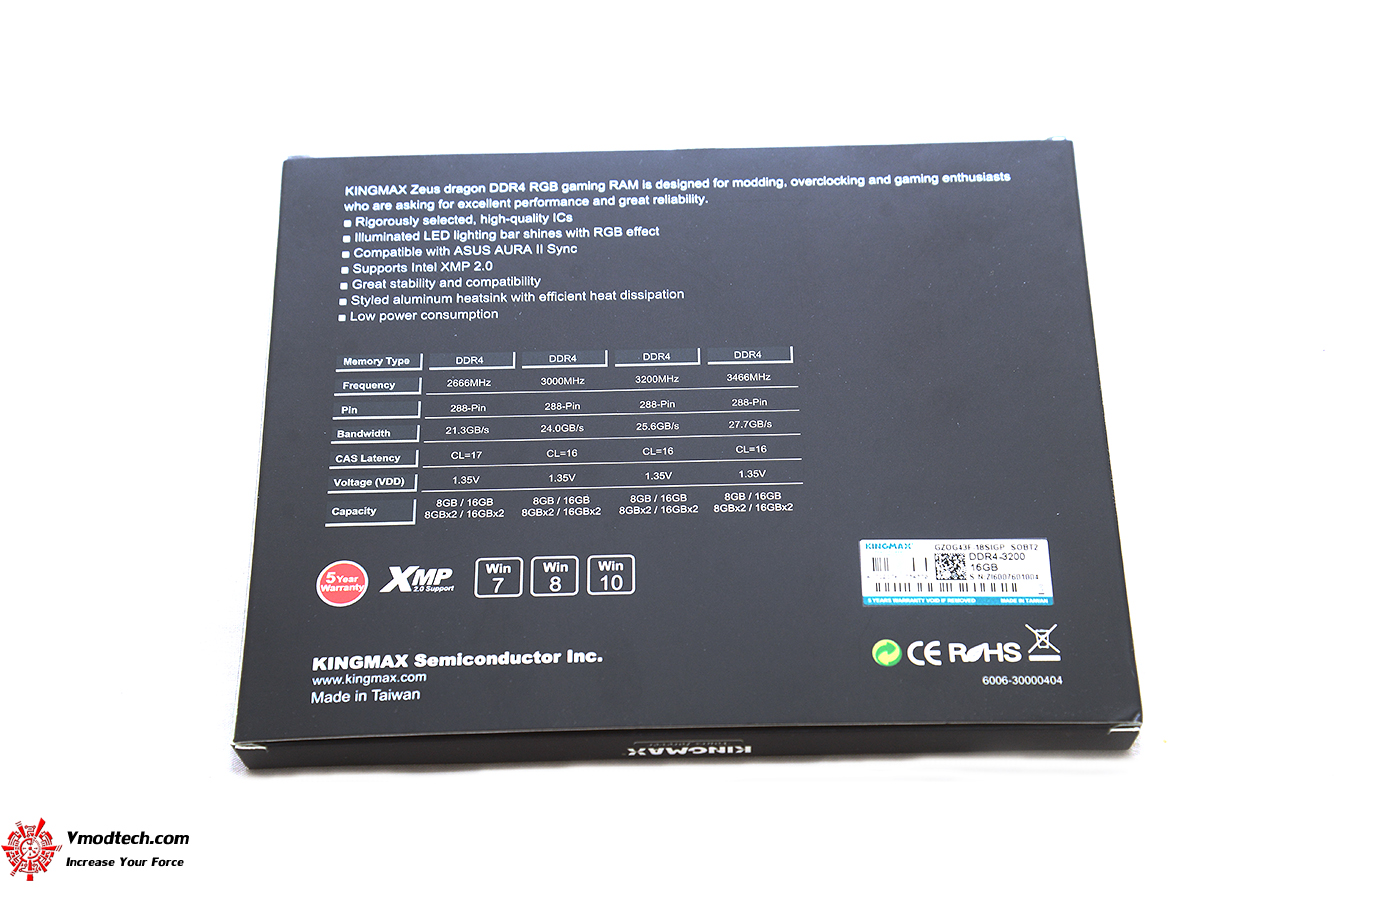 dsc 5388 Kingmax Zeus Dragon DDR4 RGB GAMING RAM 3200Mhz Review